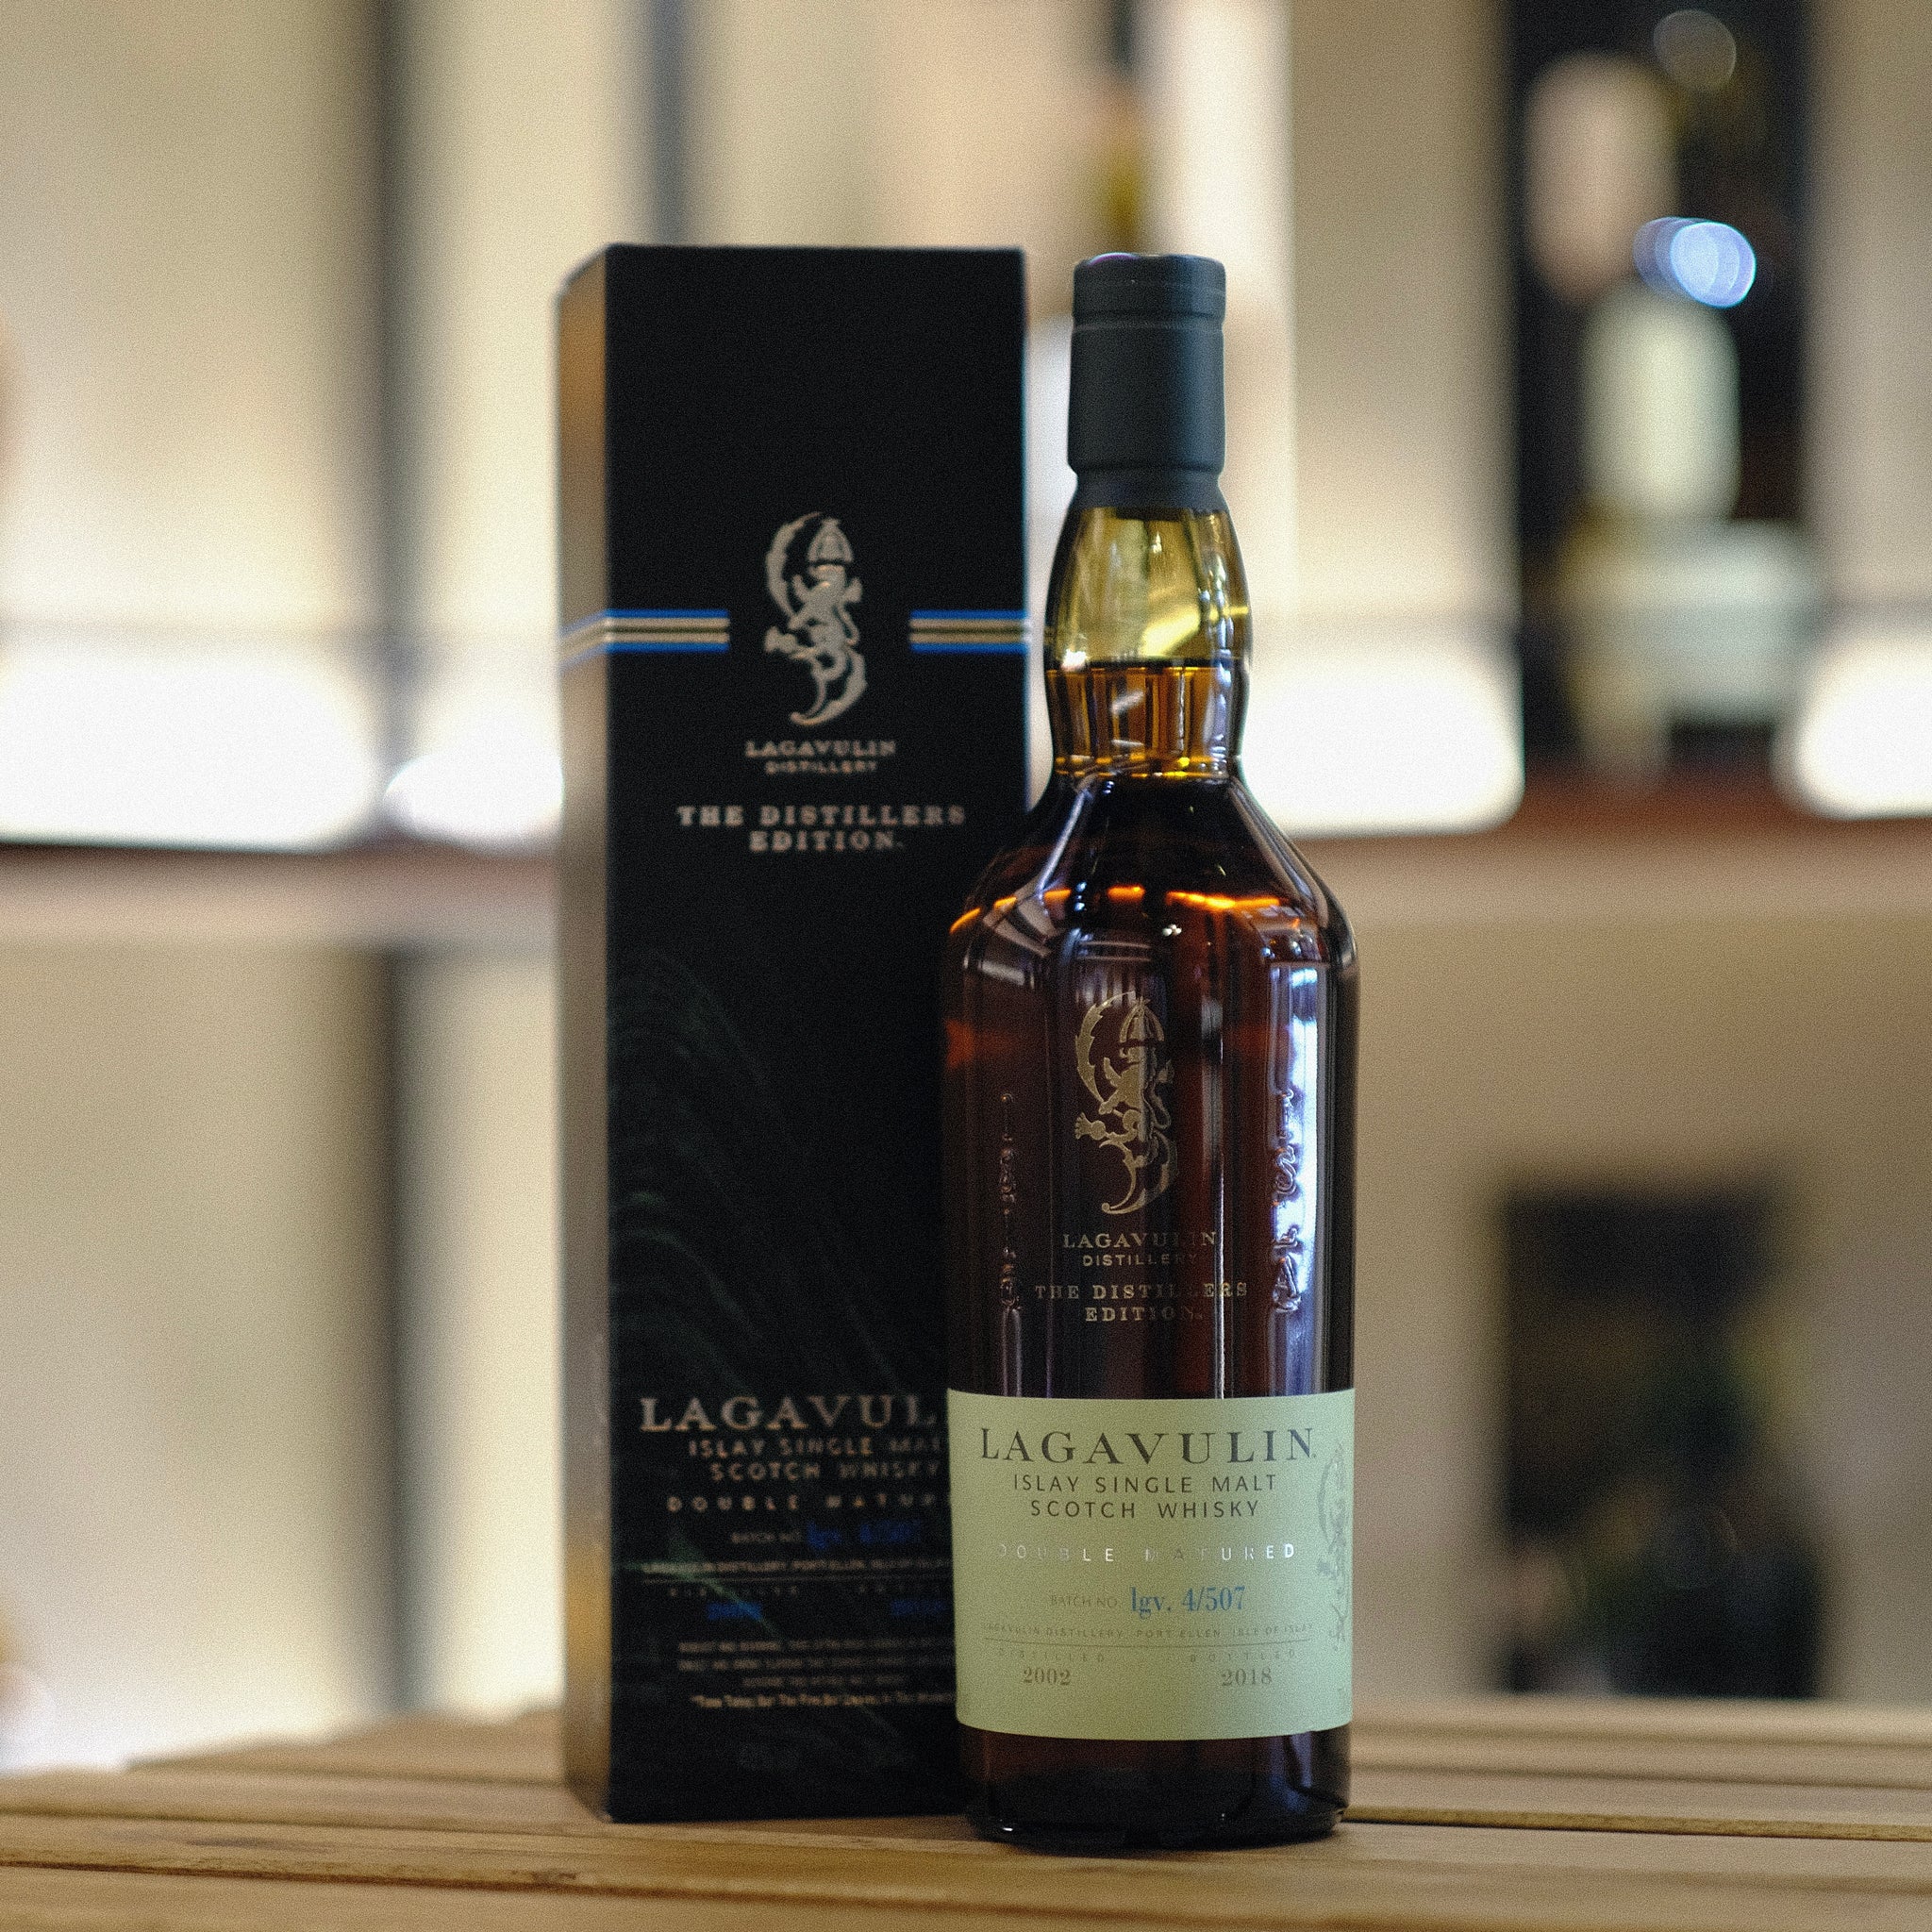 Lagavulin Distiller's Edition 2002-2018 Single Malt Scotch Whisky